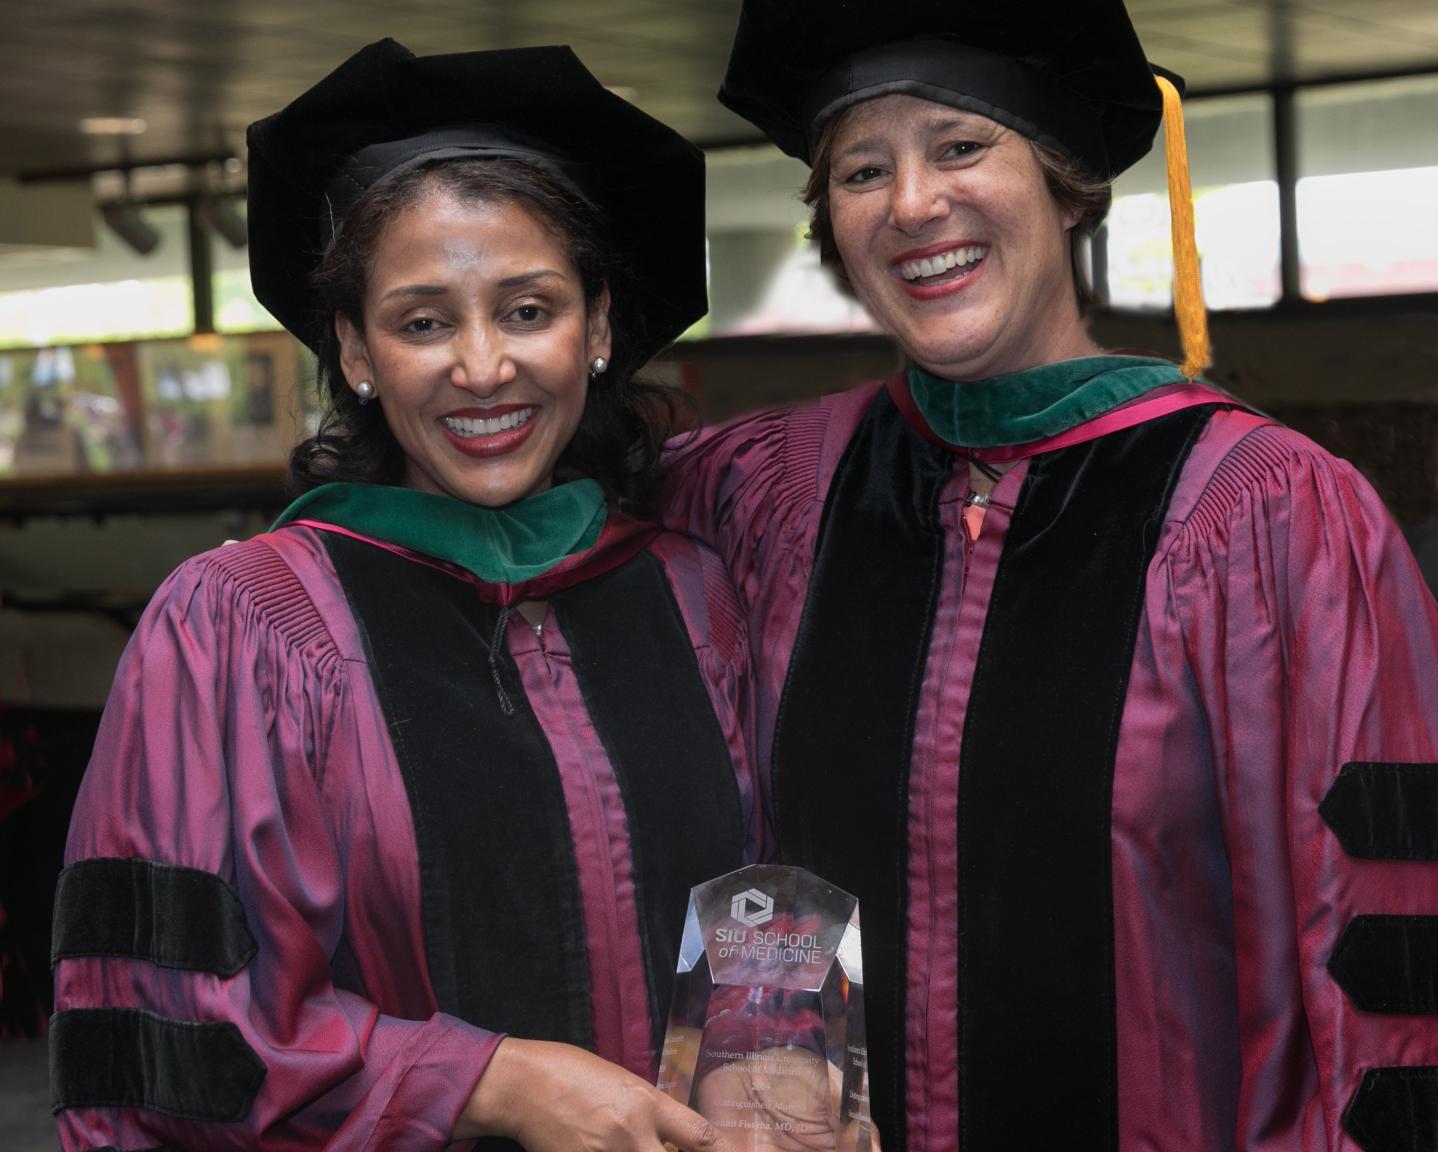 Distinguished Alumni with her Award